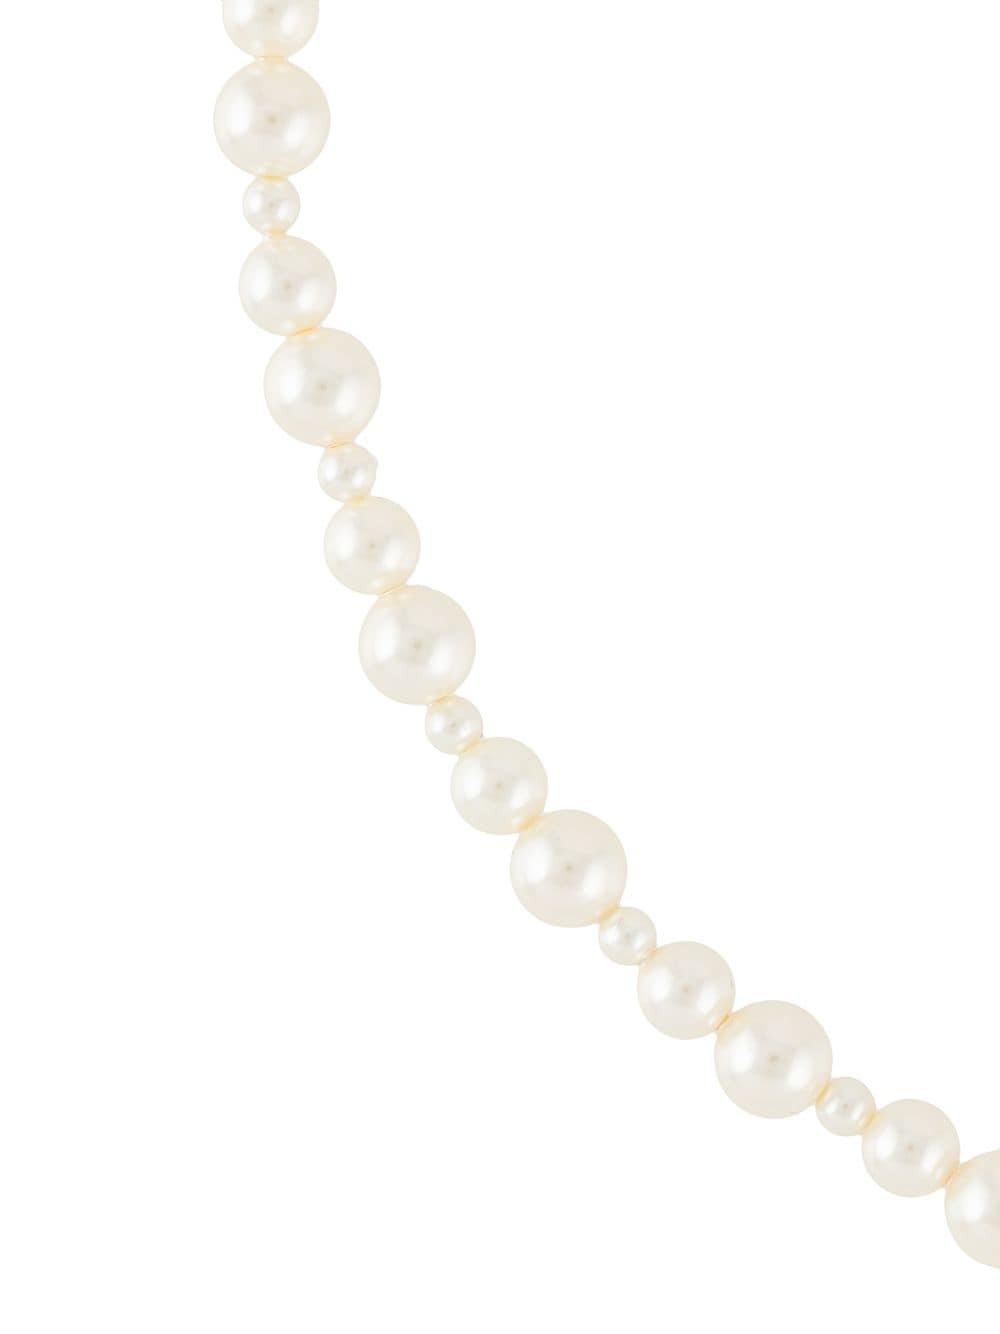 Bailey pearl necklace - 3